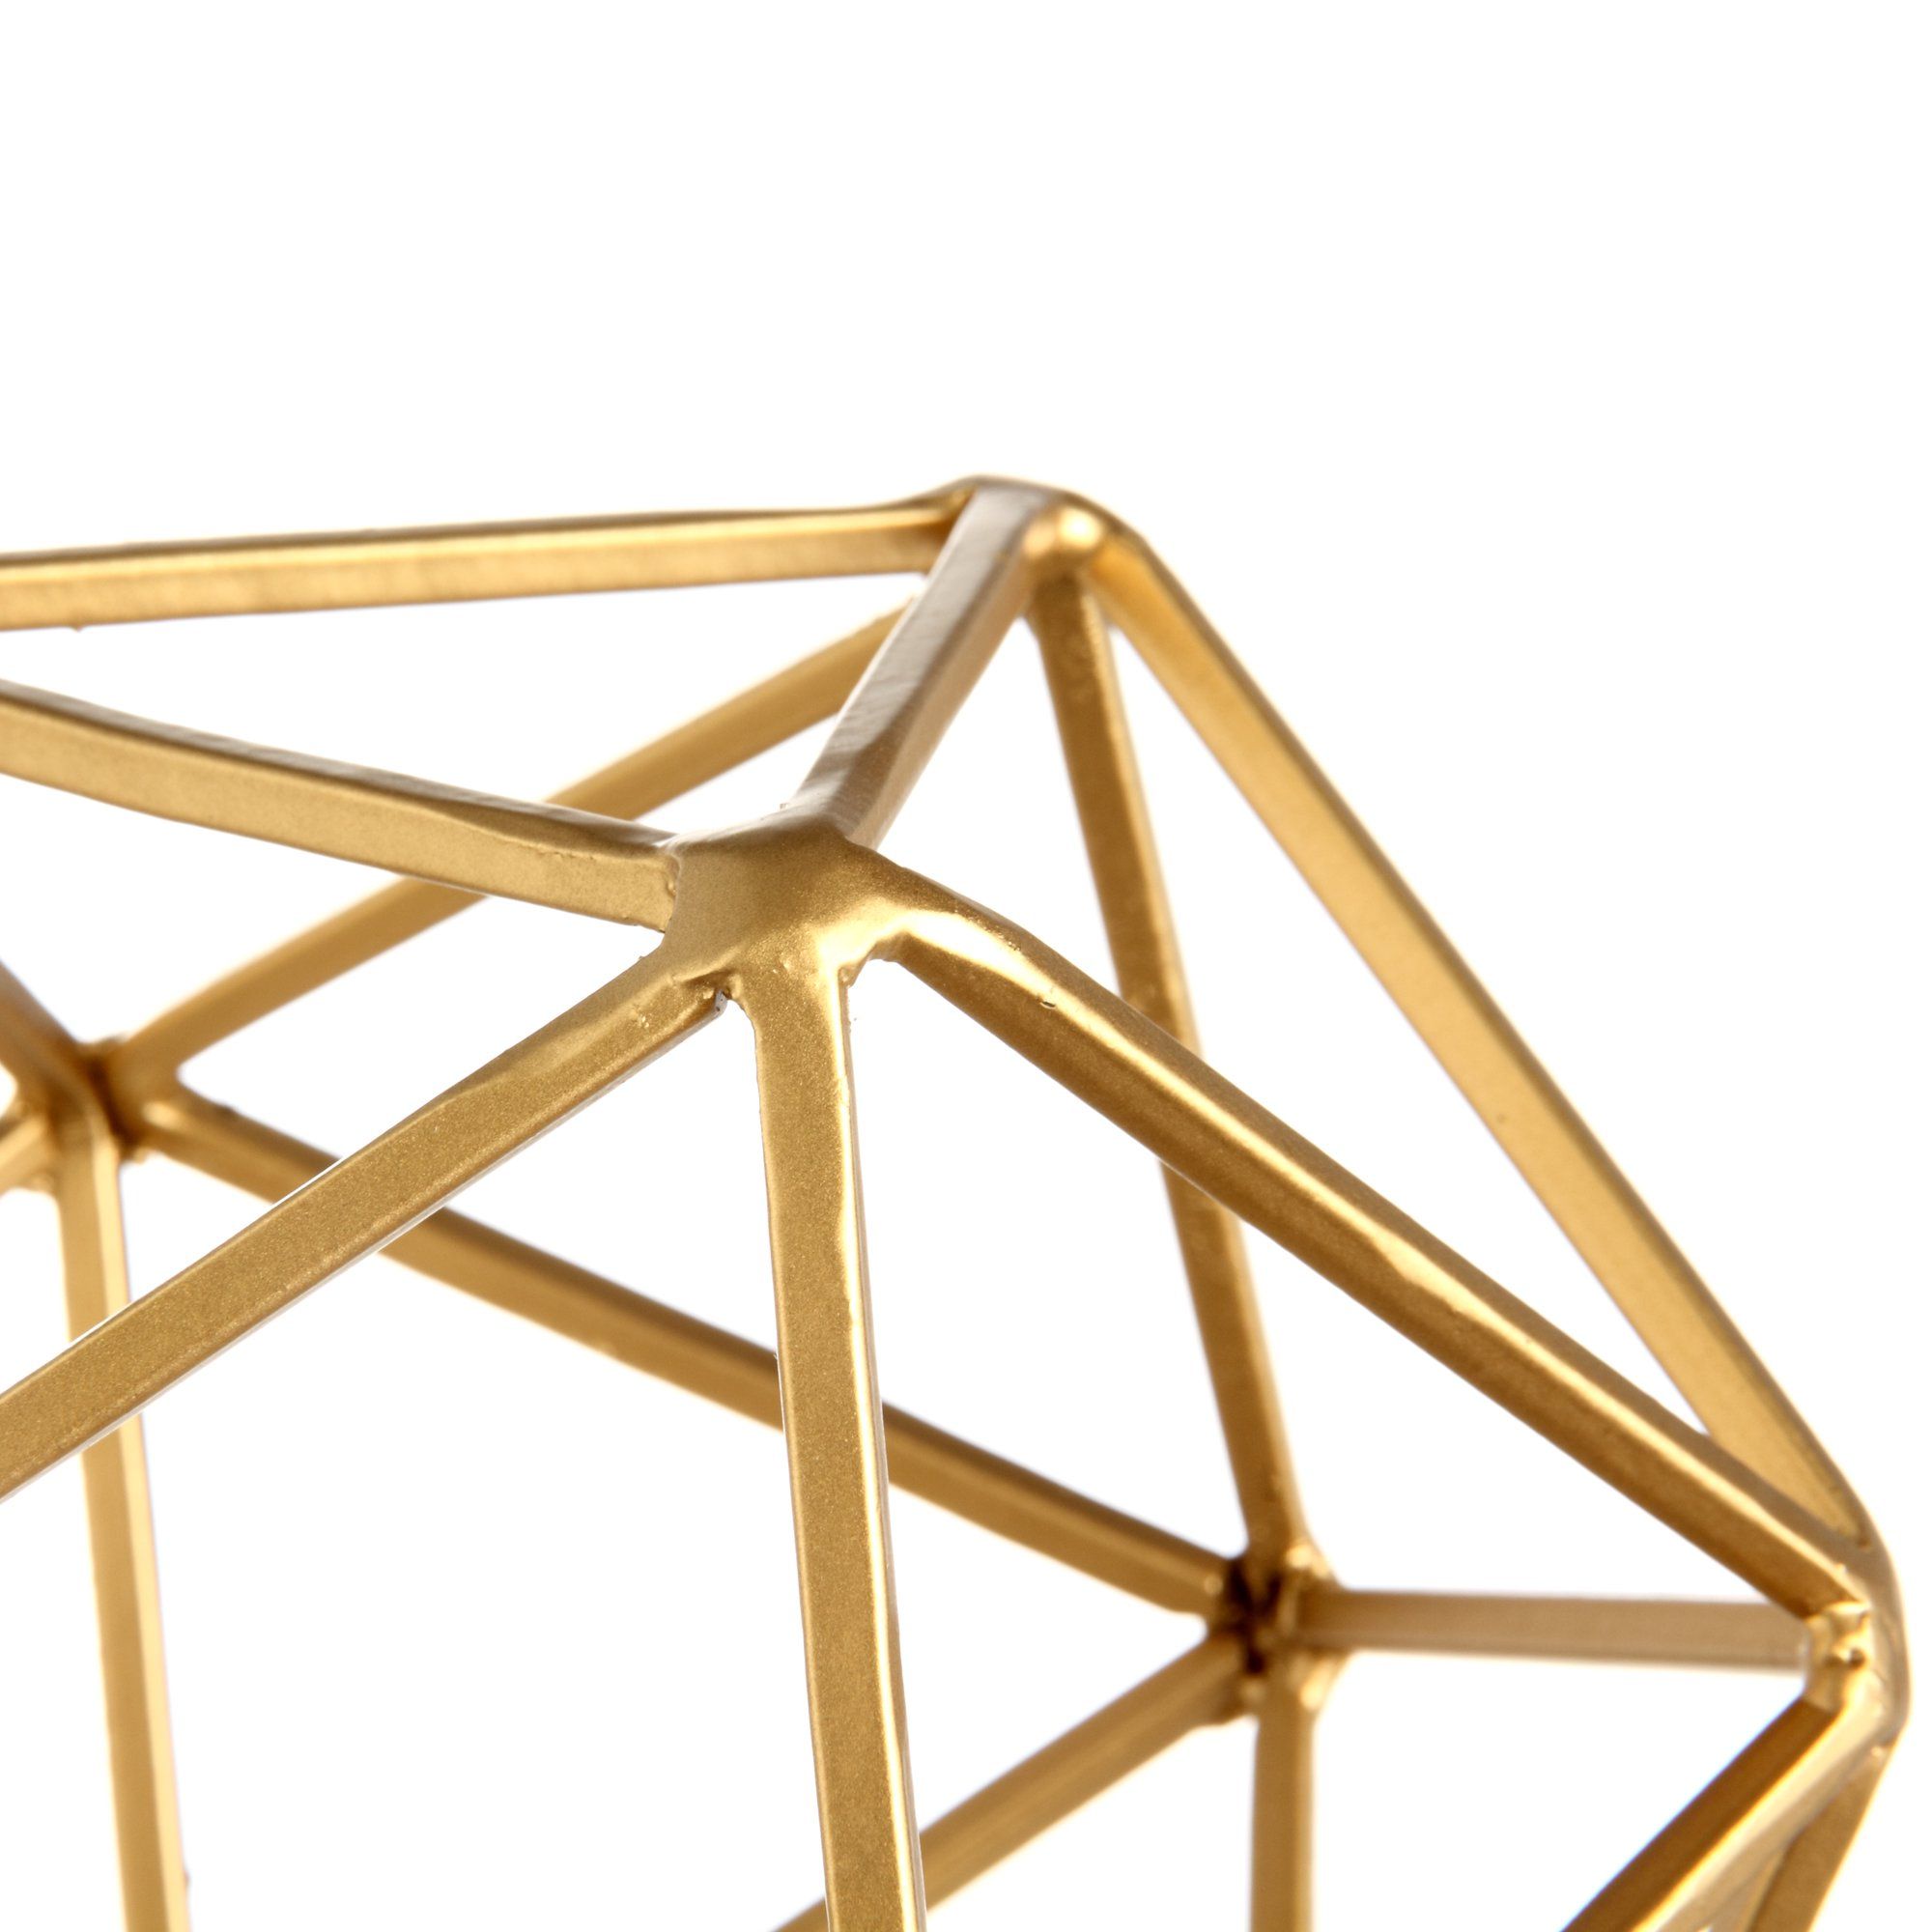 Better Homes & Gardens 5"W x 6"H Icosahedron Iron Geometric Tabletop Sculpture, Medium, Gold, 1 P... | Walmart (US)